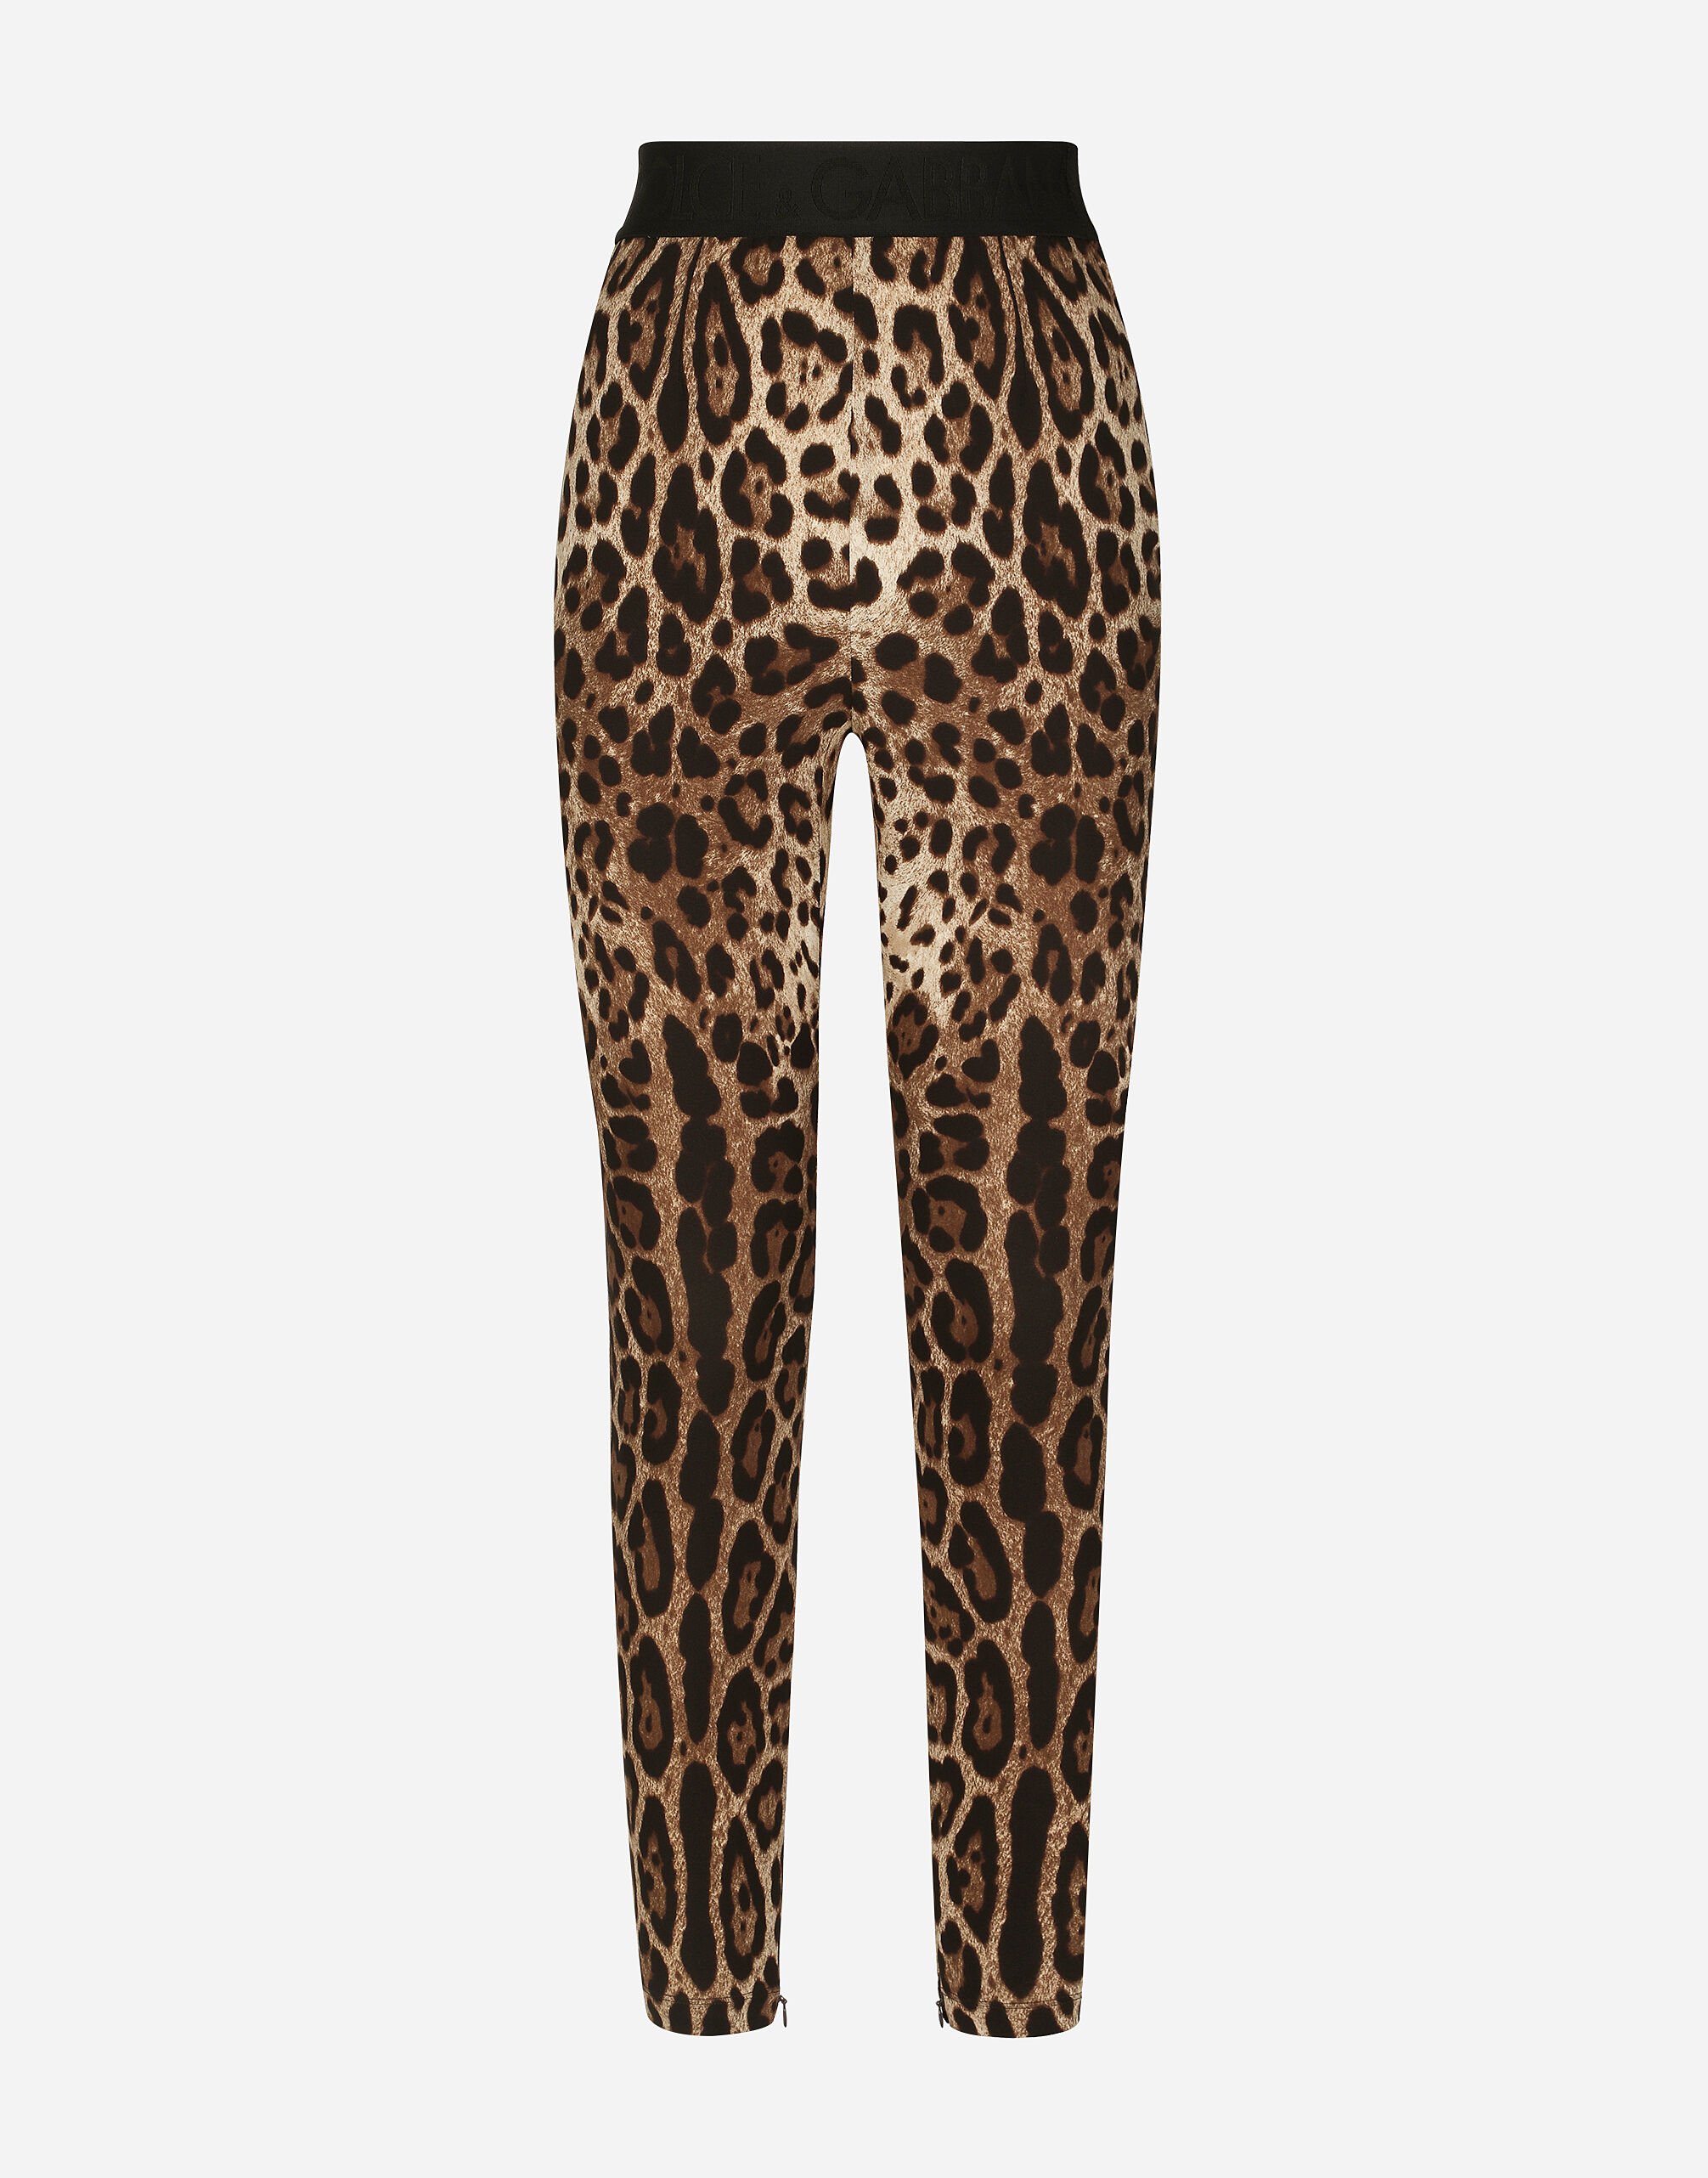 DOLCE & GABBANA SS97 Leopard Print Dress Pants Trousers S M 44 Animal  Vintage